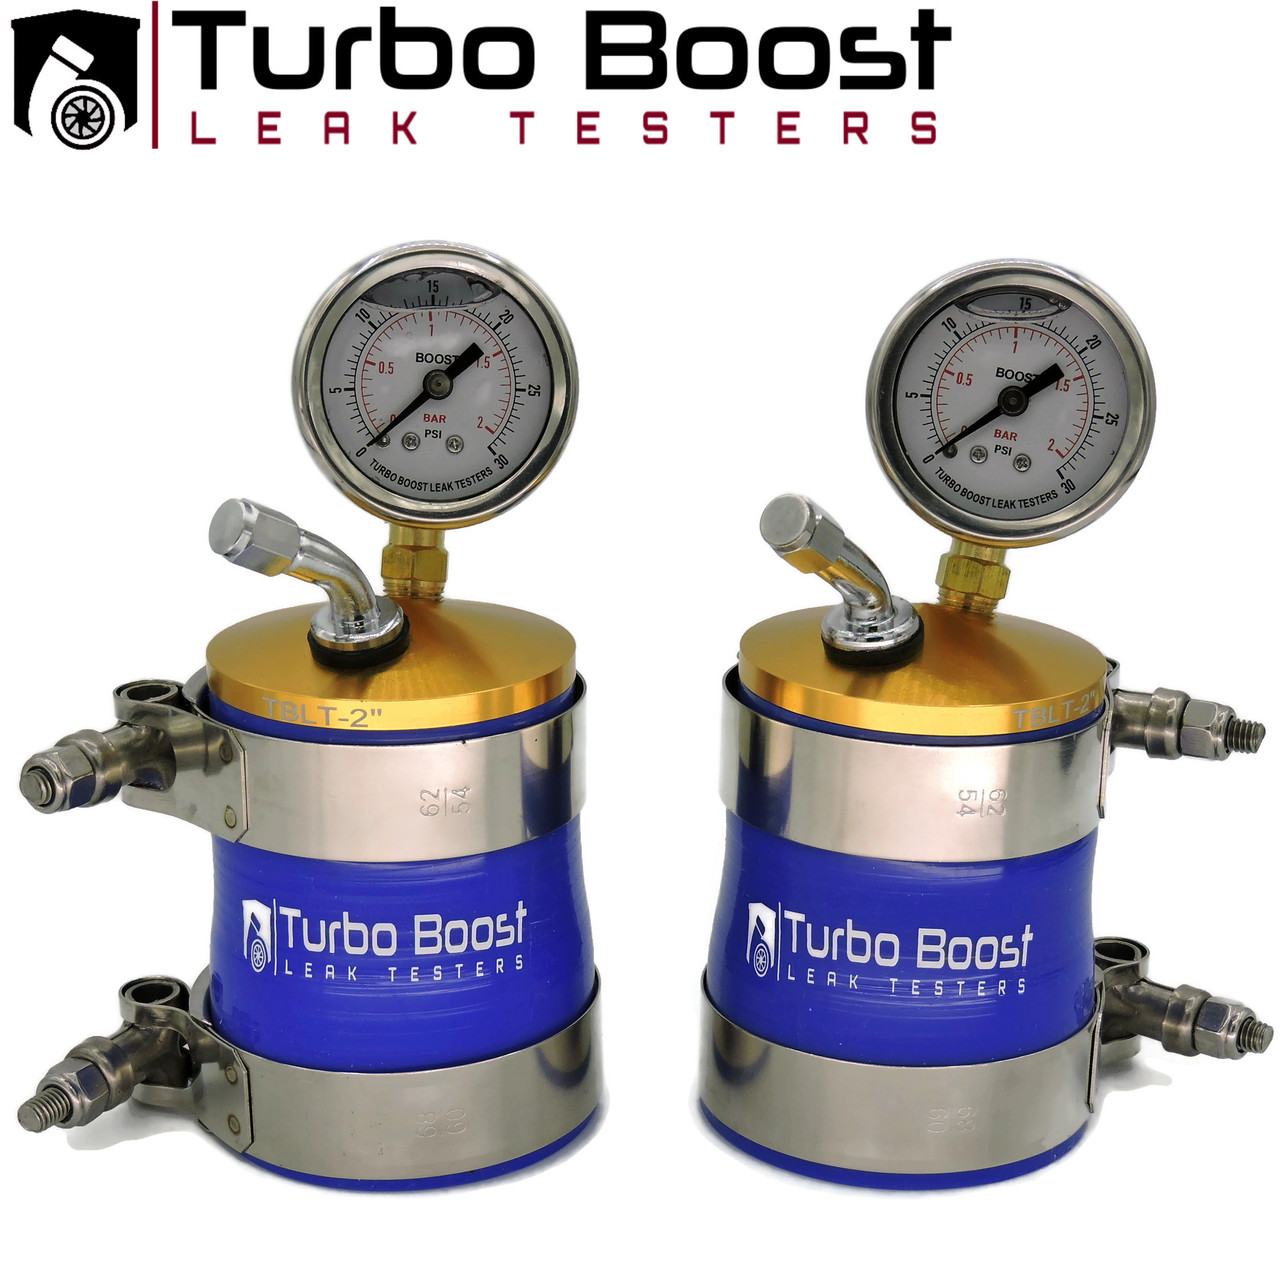 Turbo Boost Leak Testers